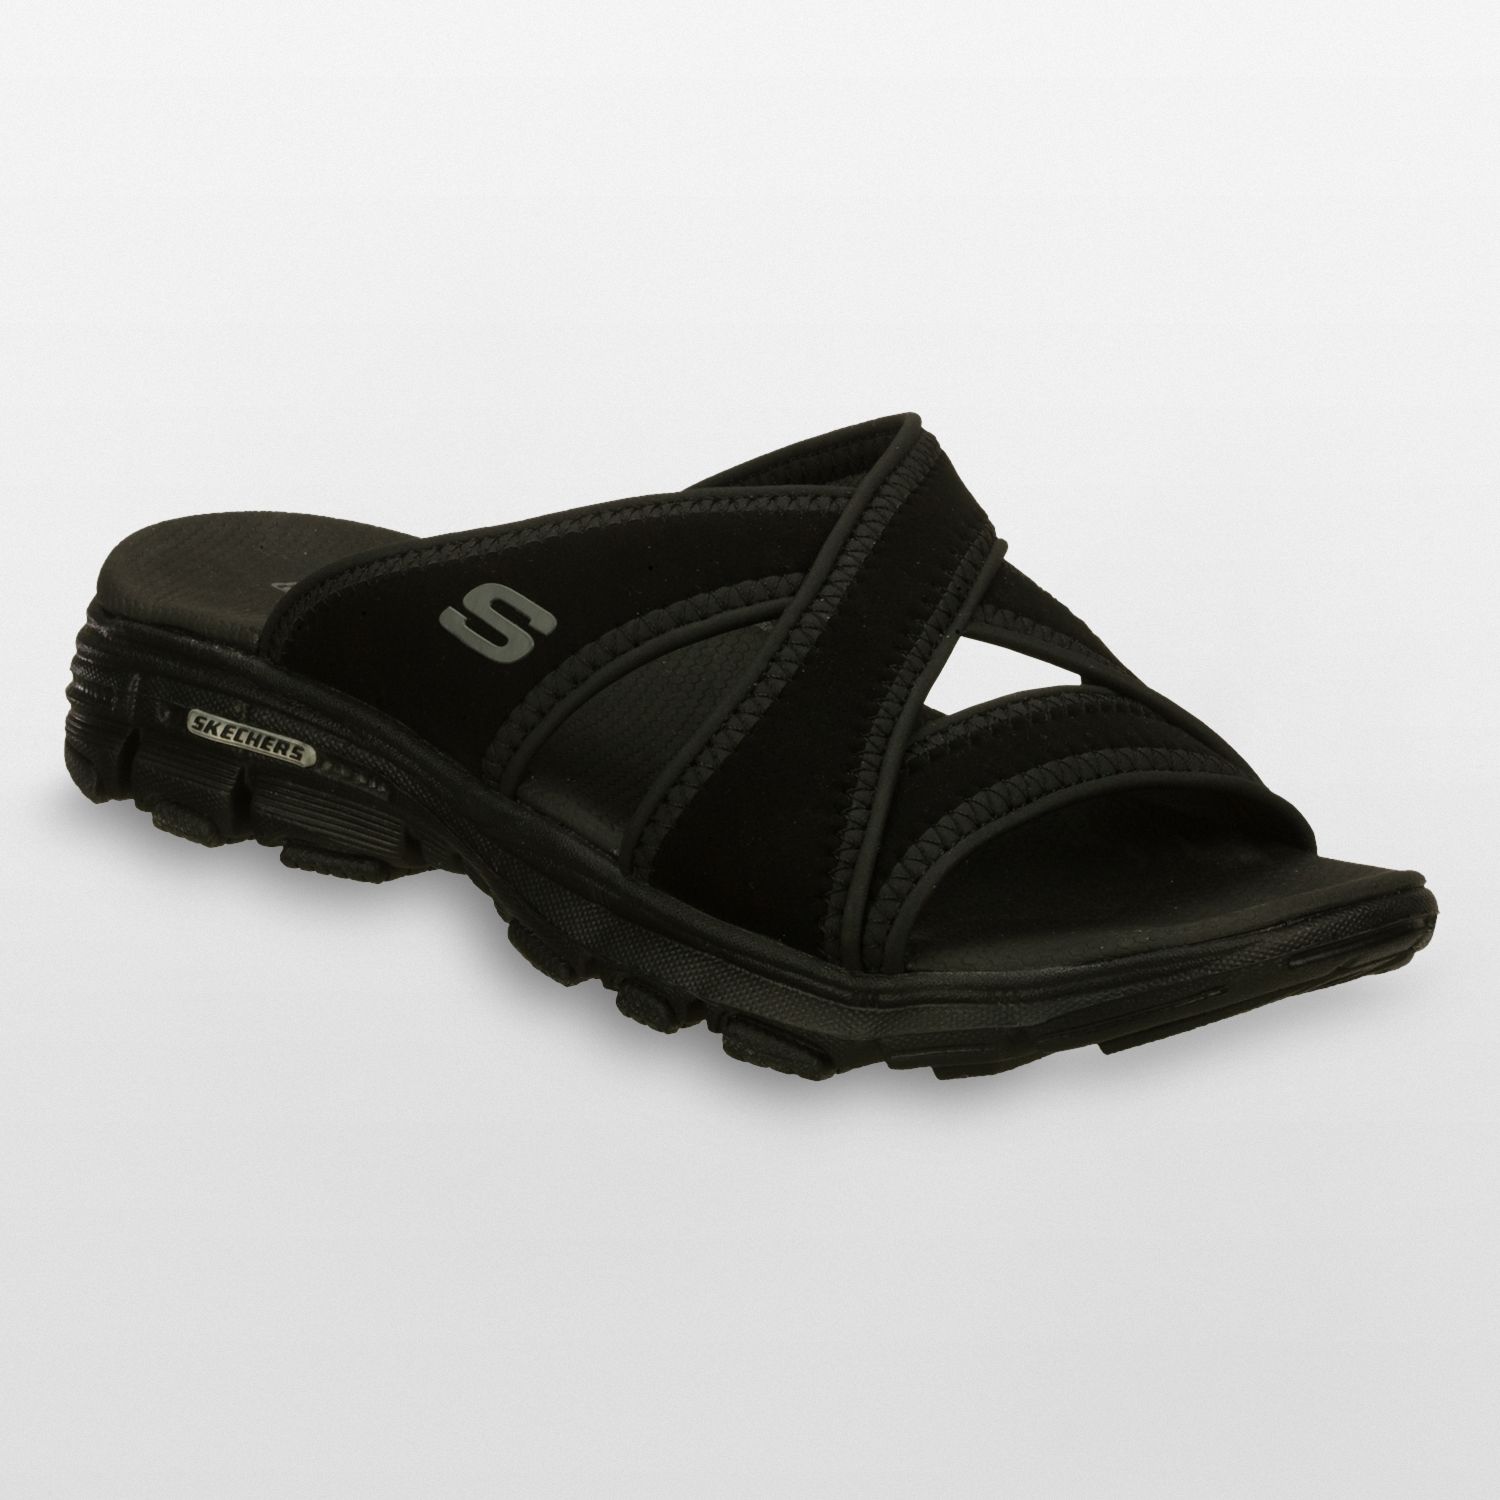 Skechers Outshine Athletic Sandals - Women